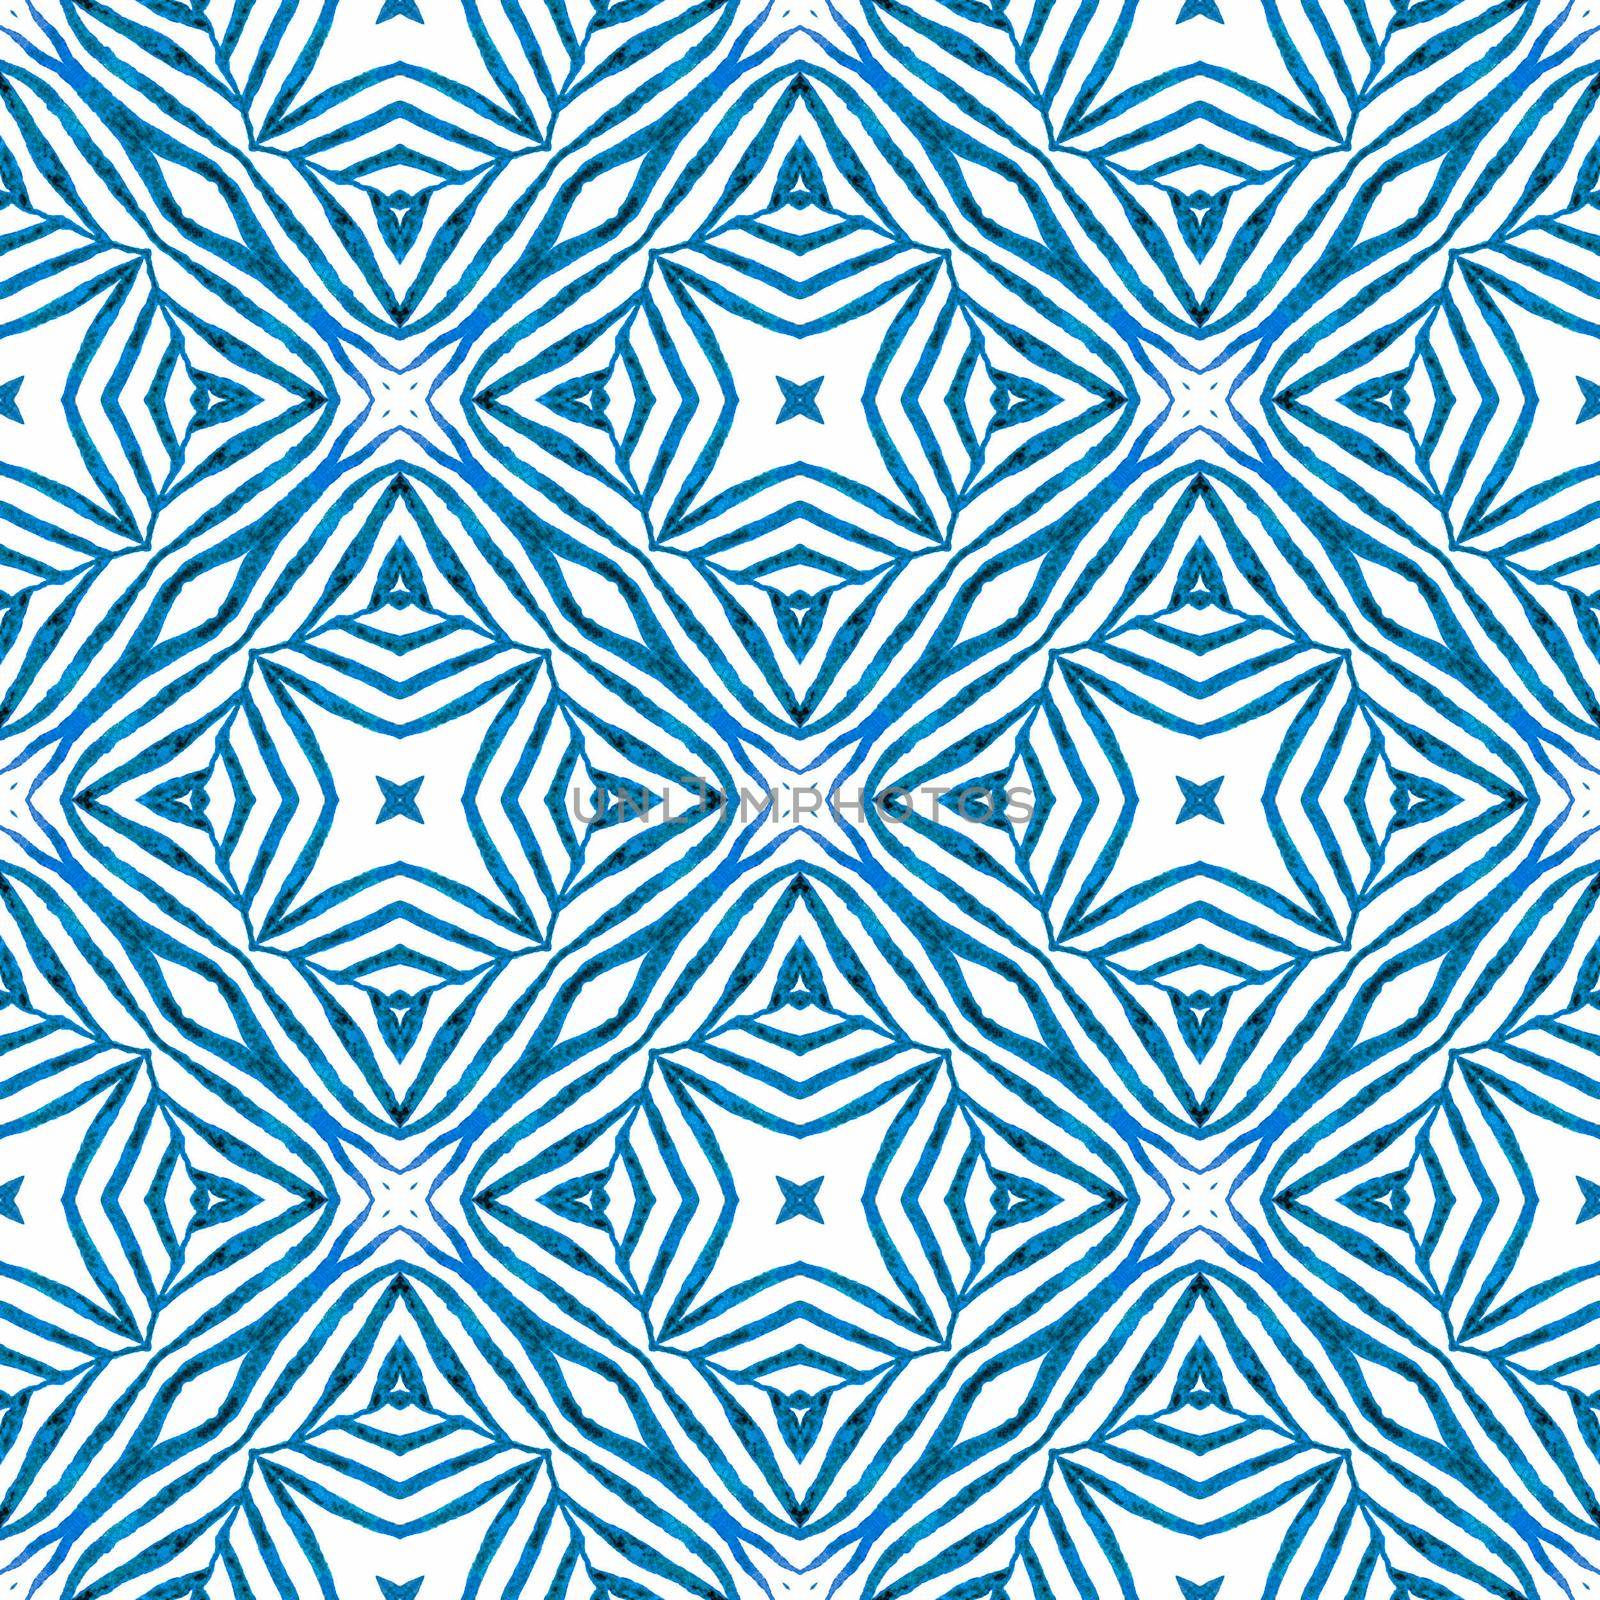 Chevron watercolor pattern. Blue admirable boho chic summer design. Textile ready Actual print, swimwear fabric, wallpaper, wrapping. Green geometric chevron watercolor border.